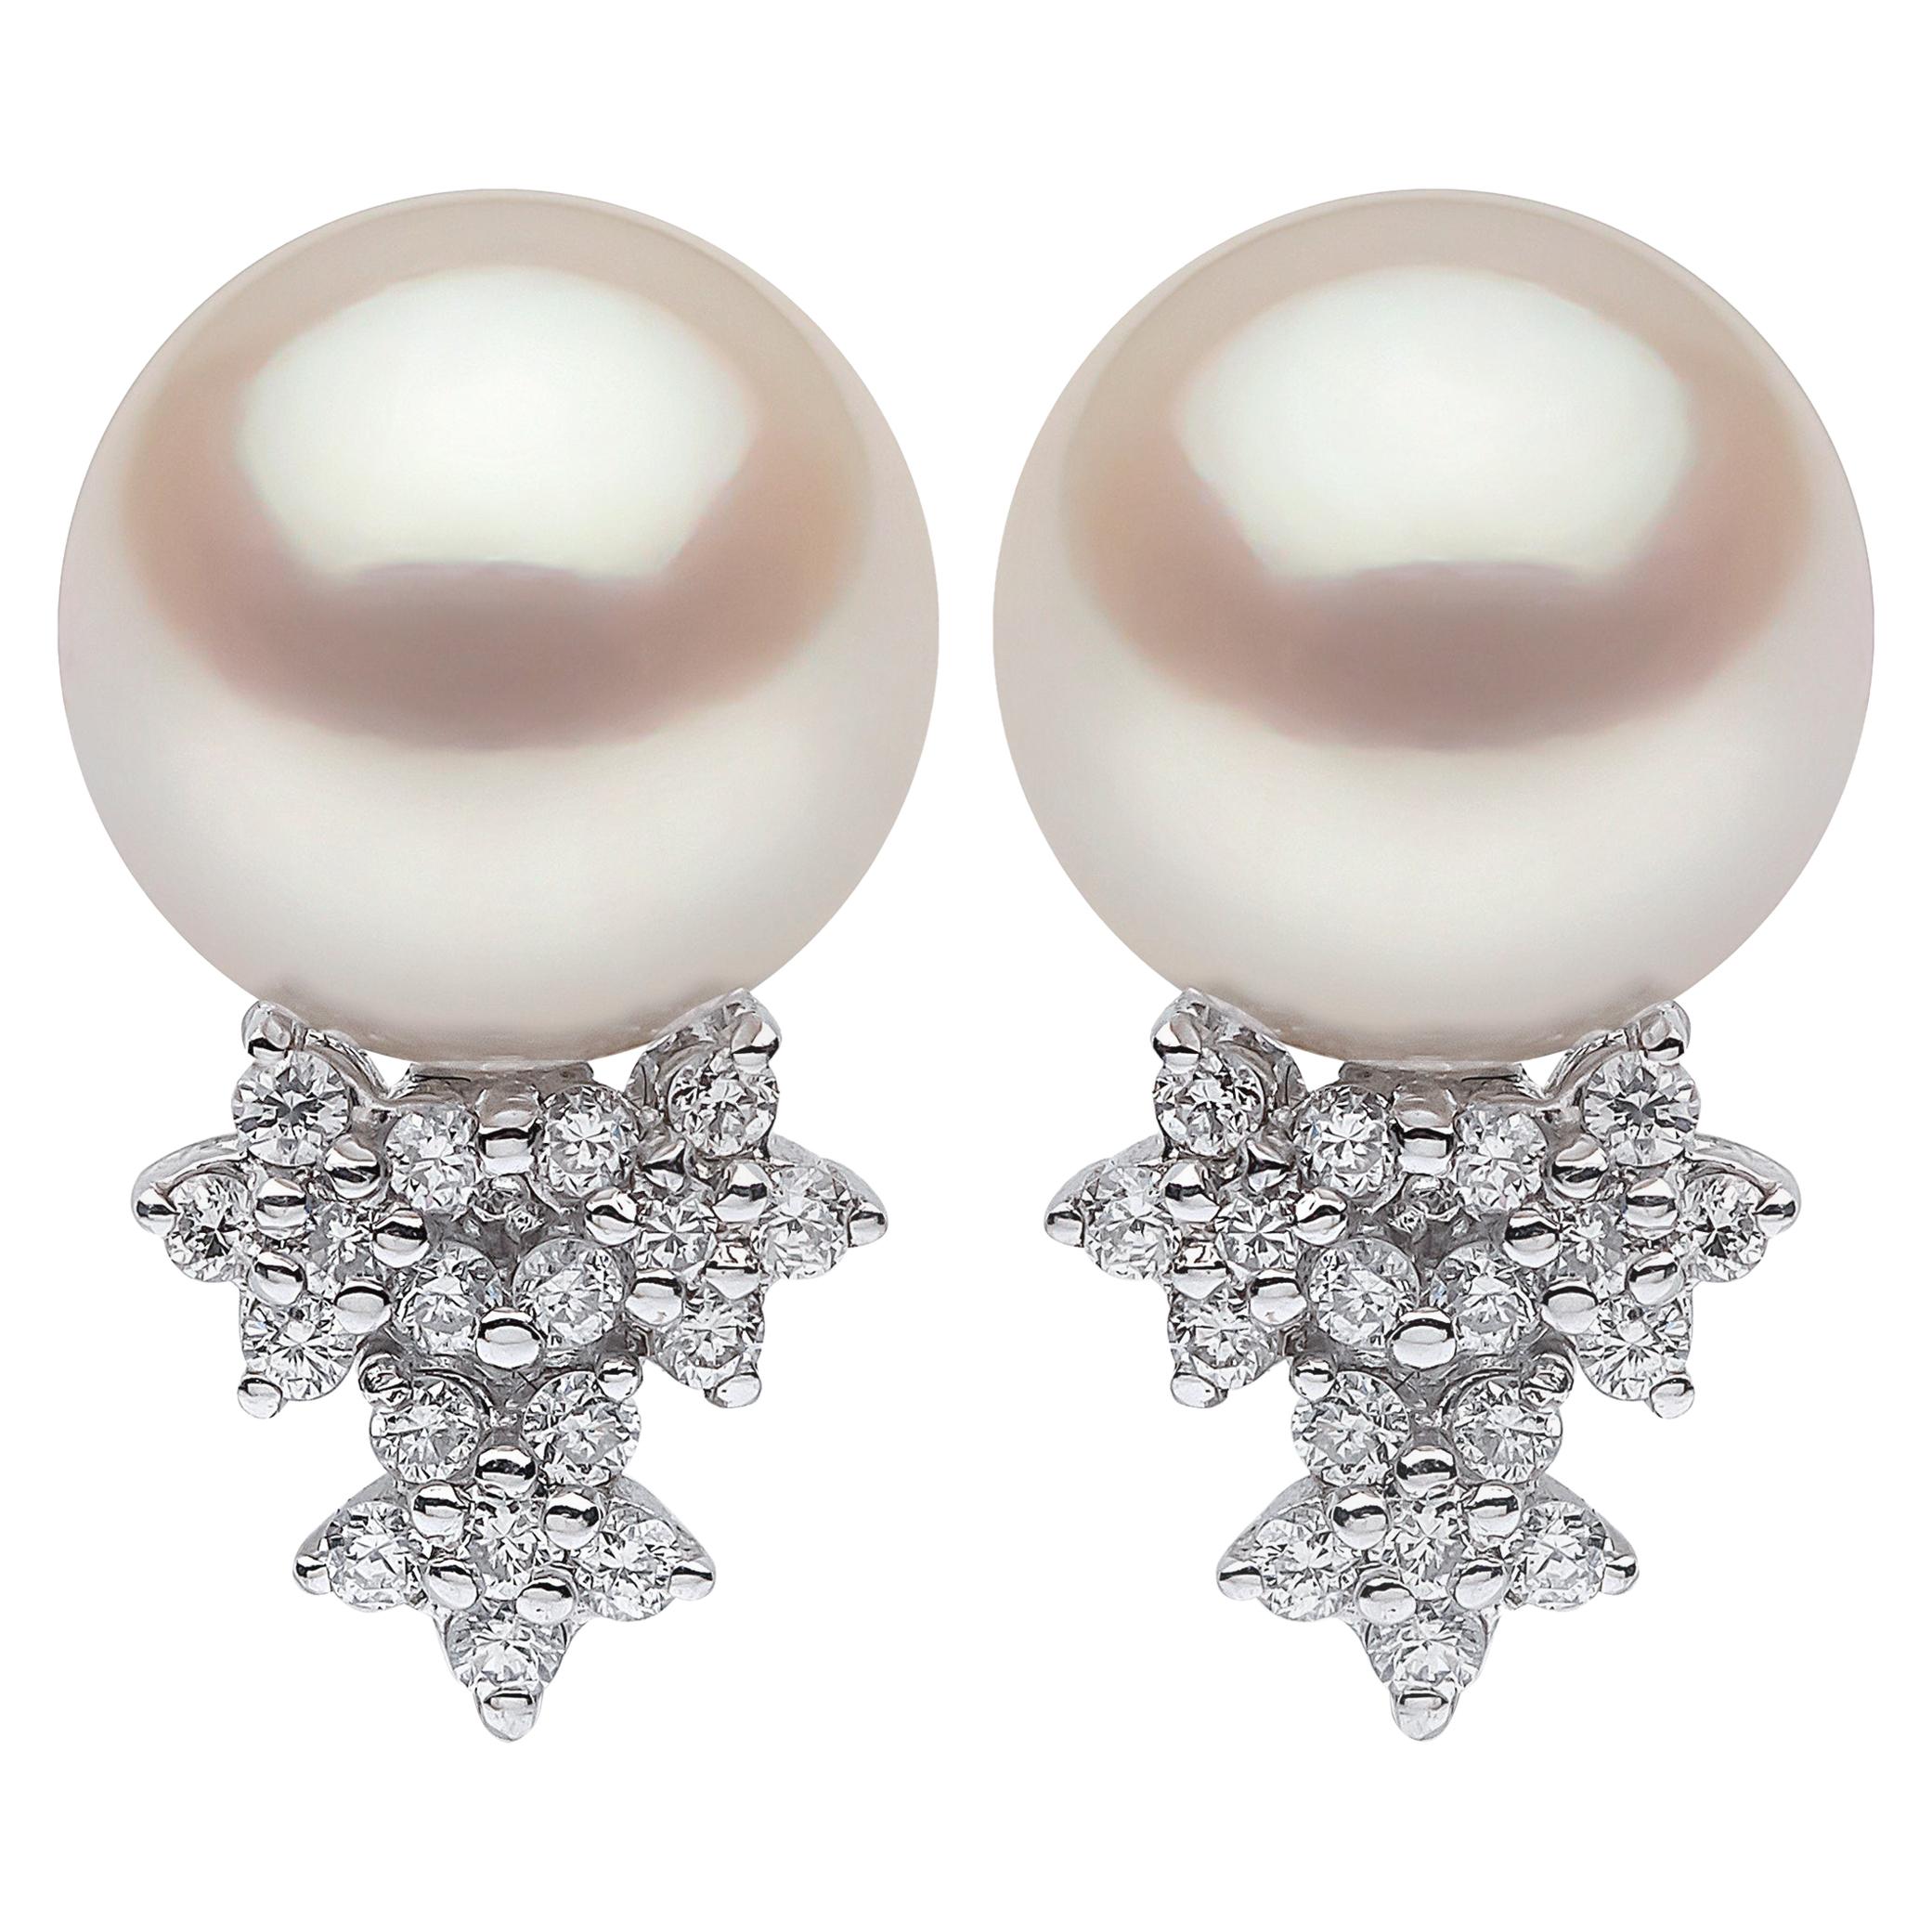 Yoko London South Sea Pearl and Diamond Earrings in 18 Karat White Gold